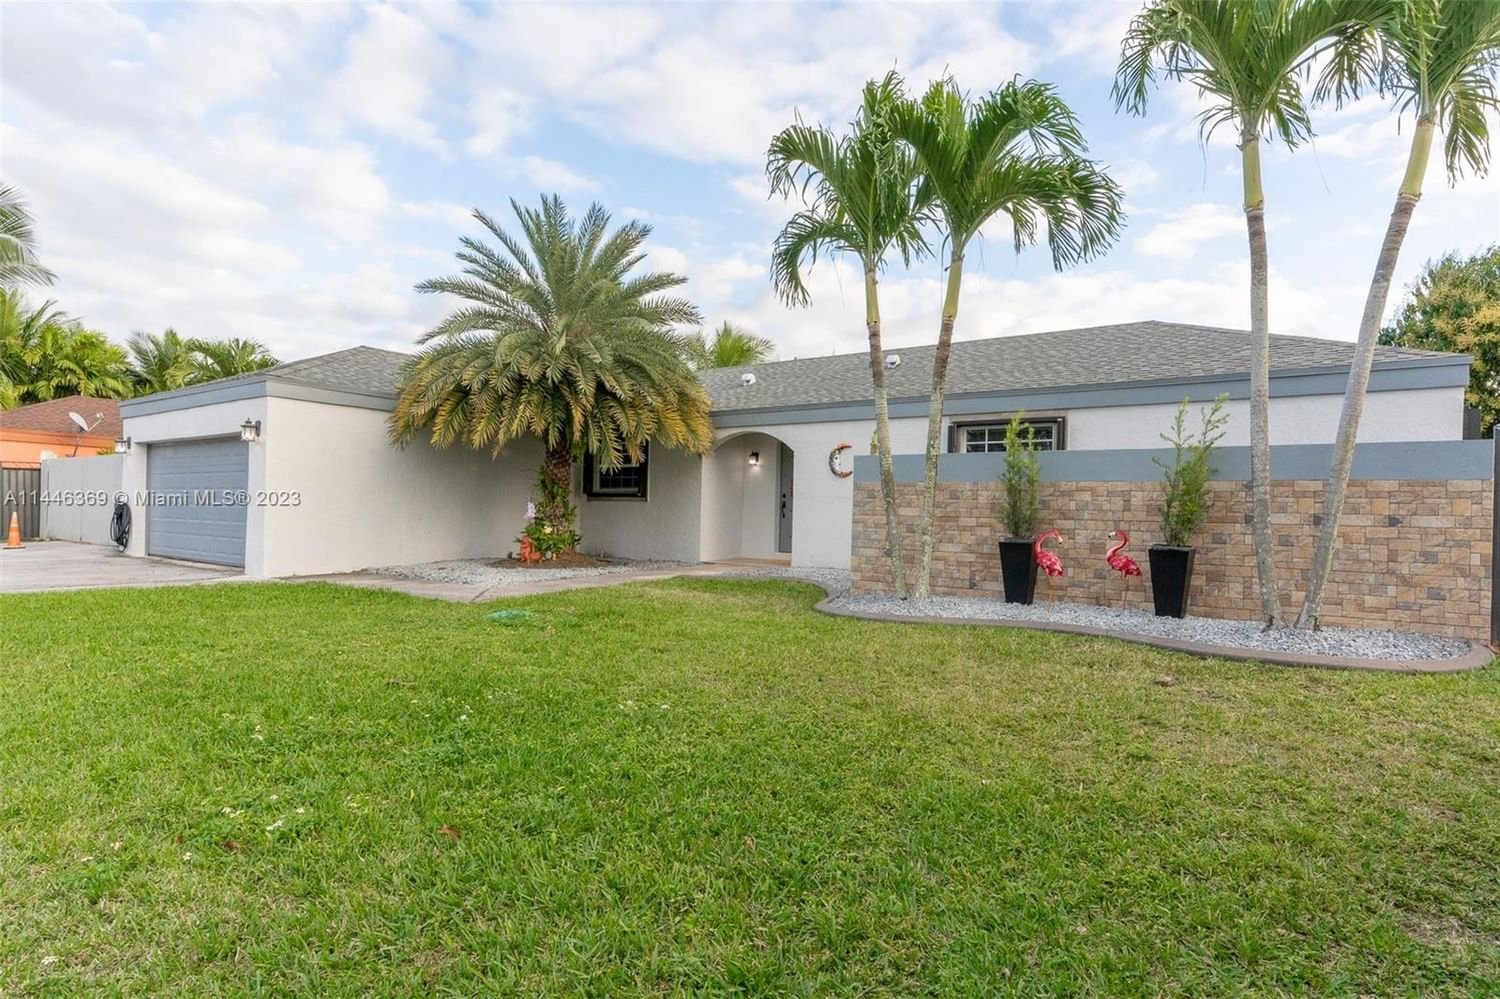 Real estate property located at 15420 156th Ter, Miami-Dade County, Miami, FL